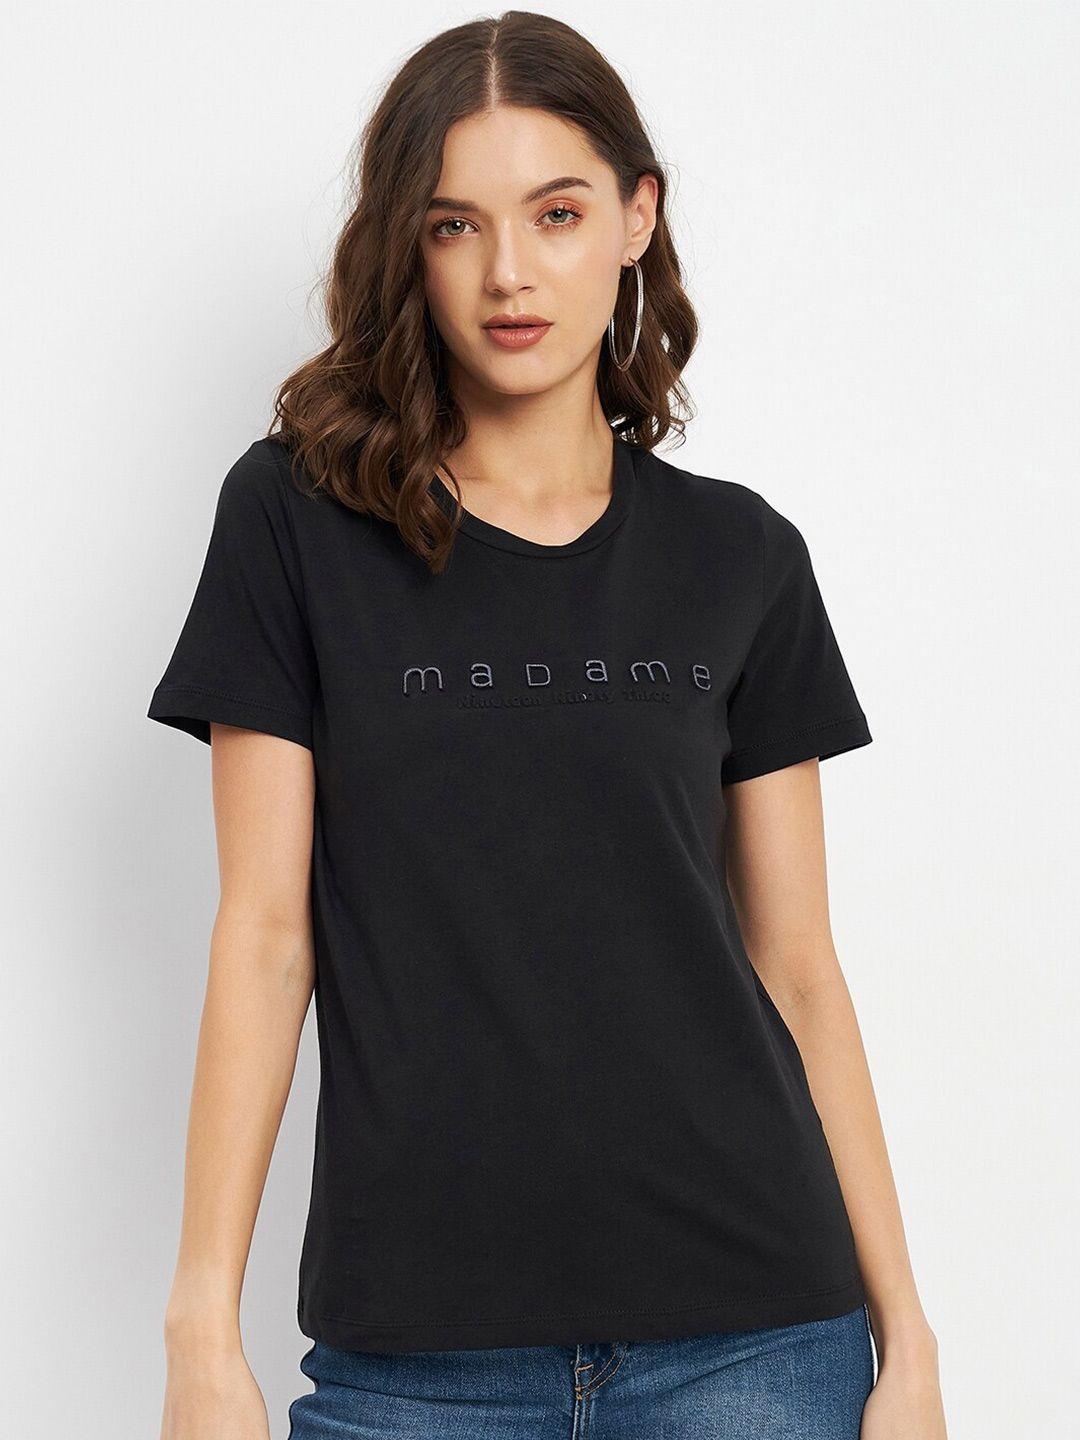 madame typography printed round neck t-shirt